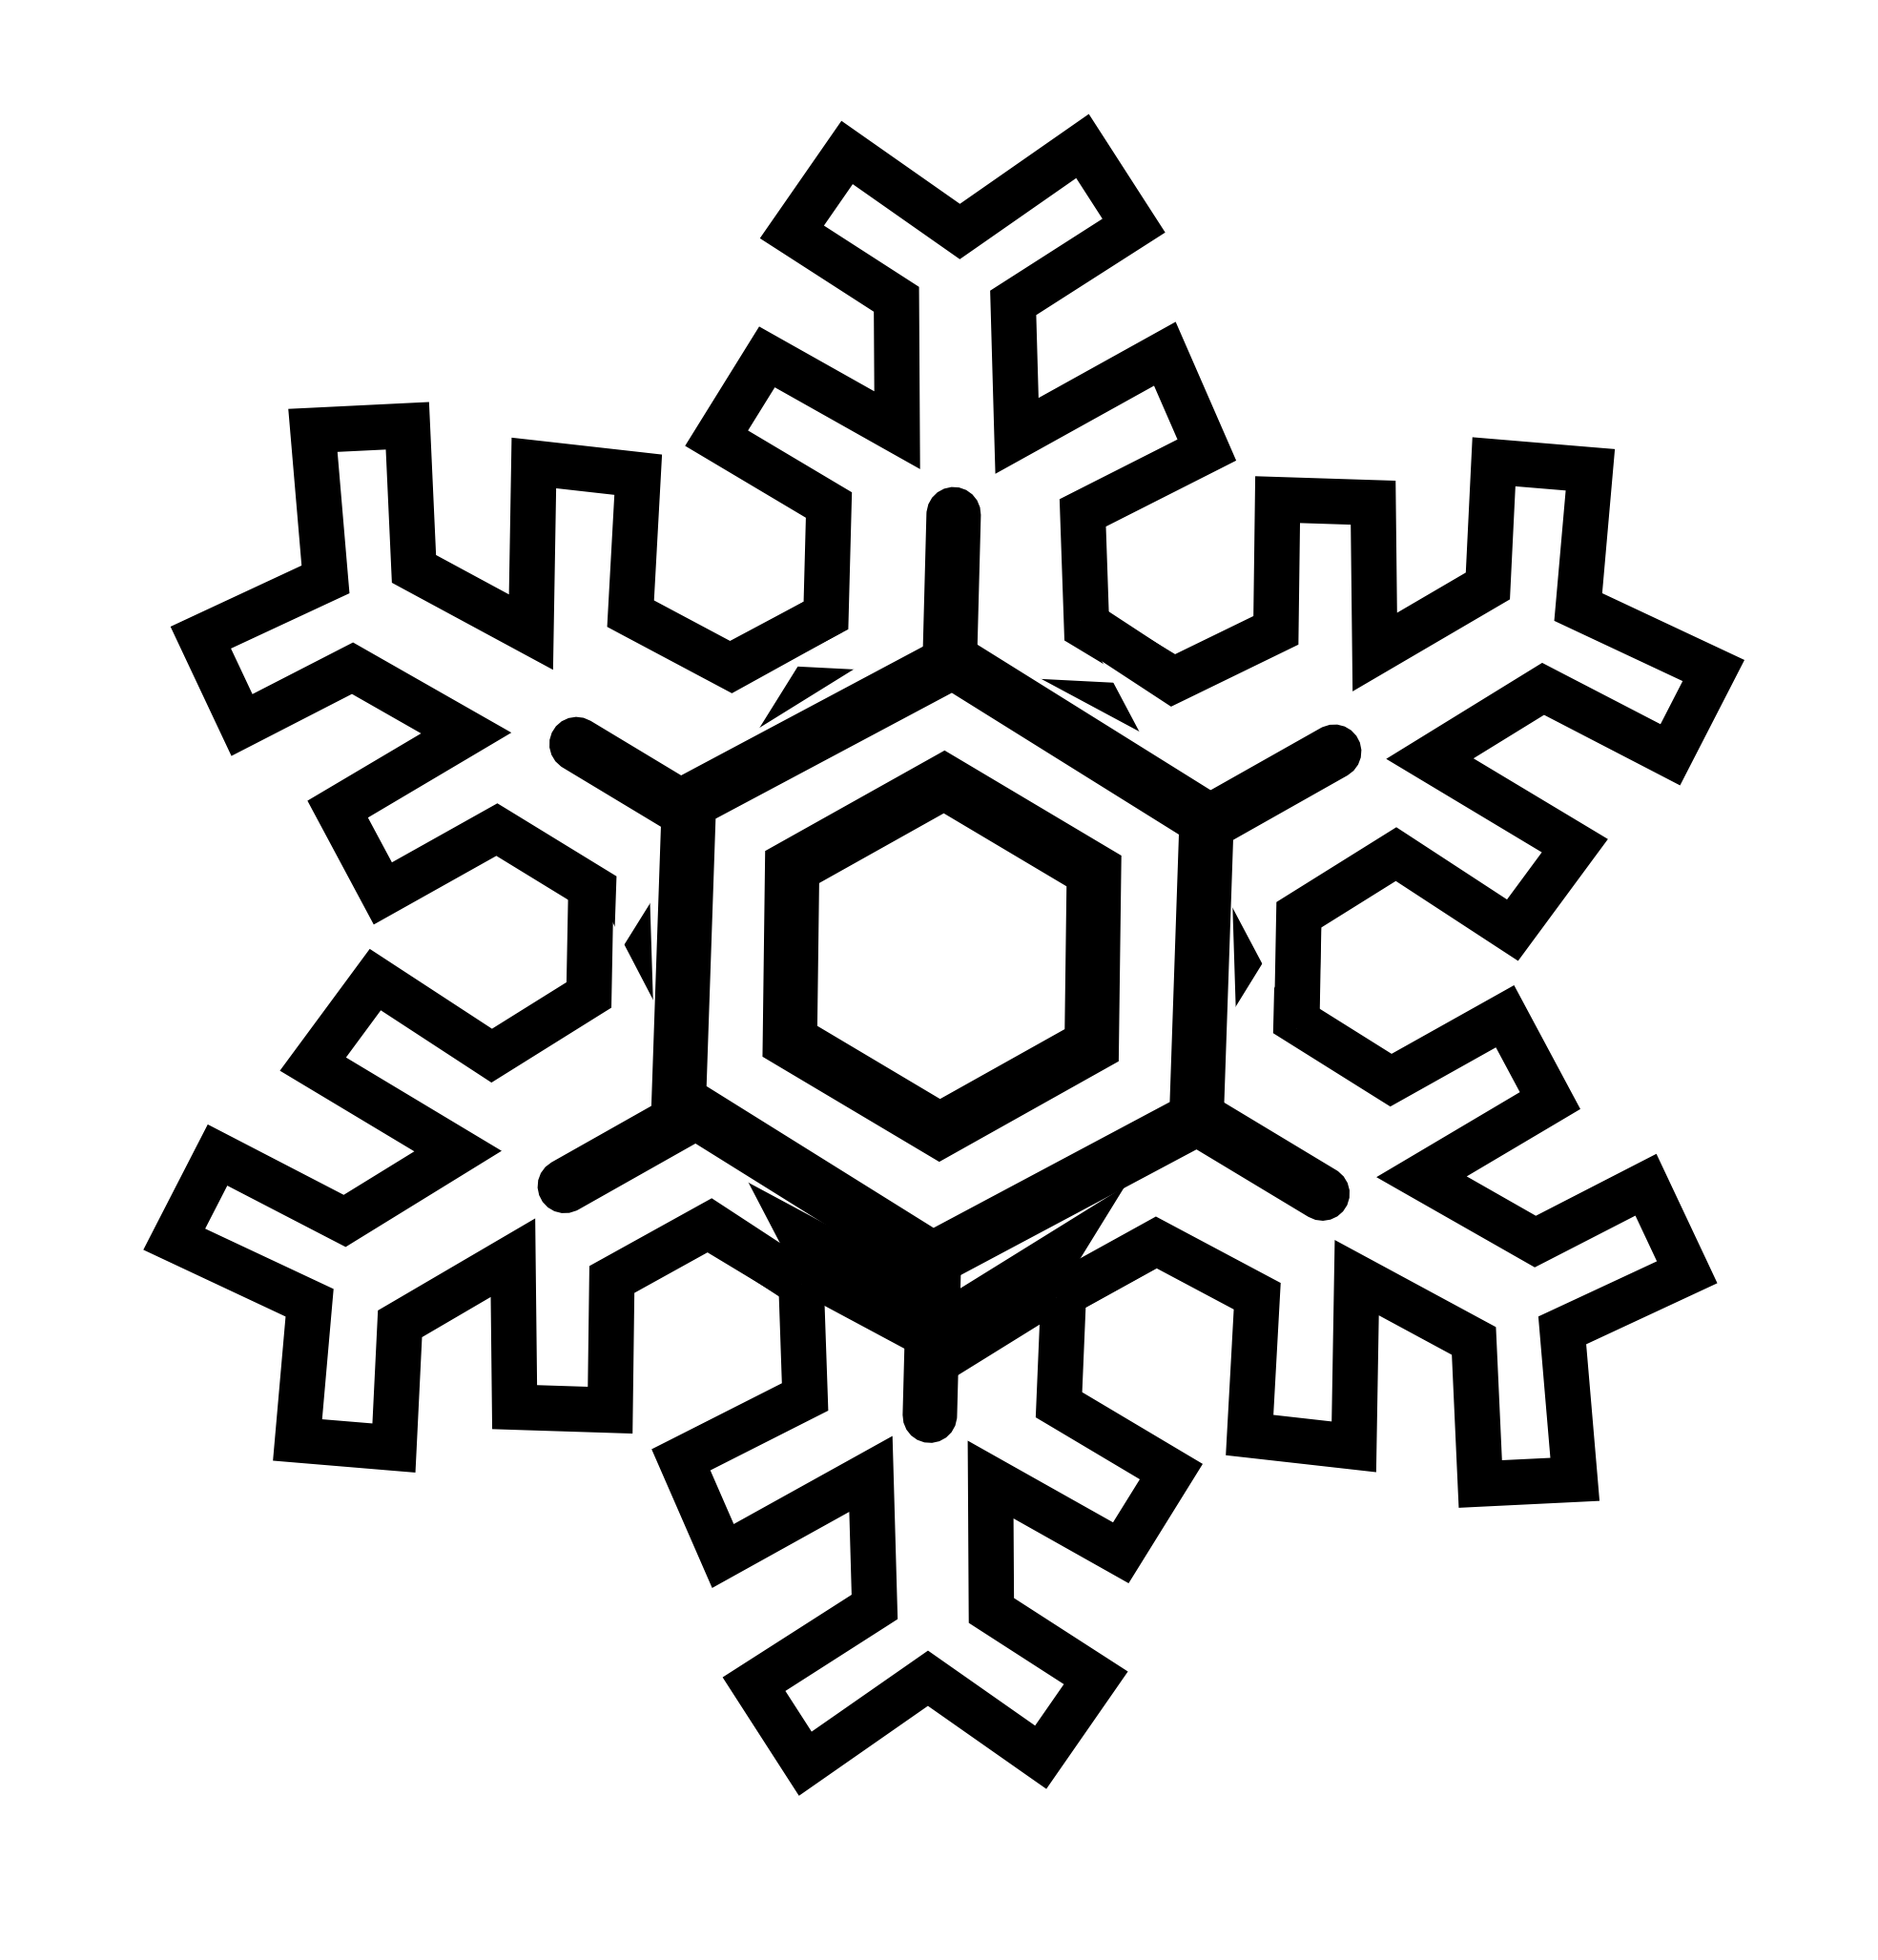 Snowflake Pictures Clip Art - ClipArt Best